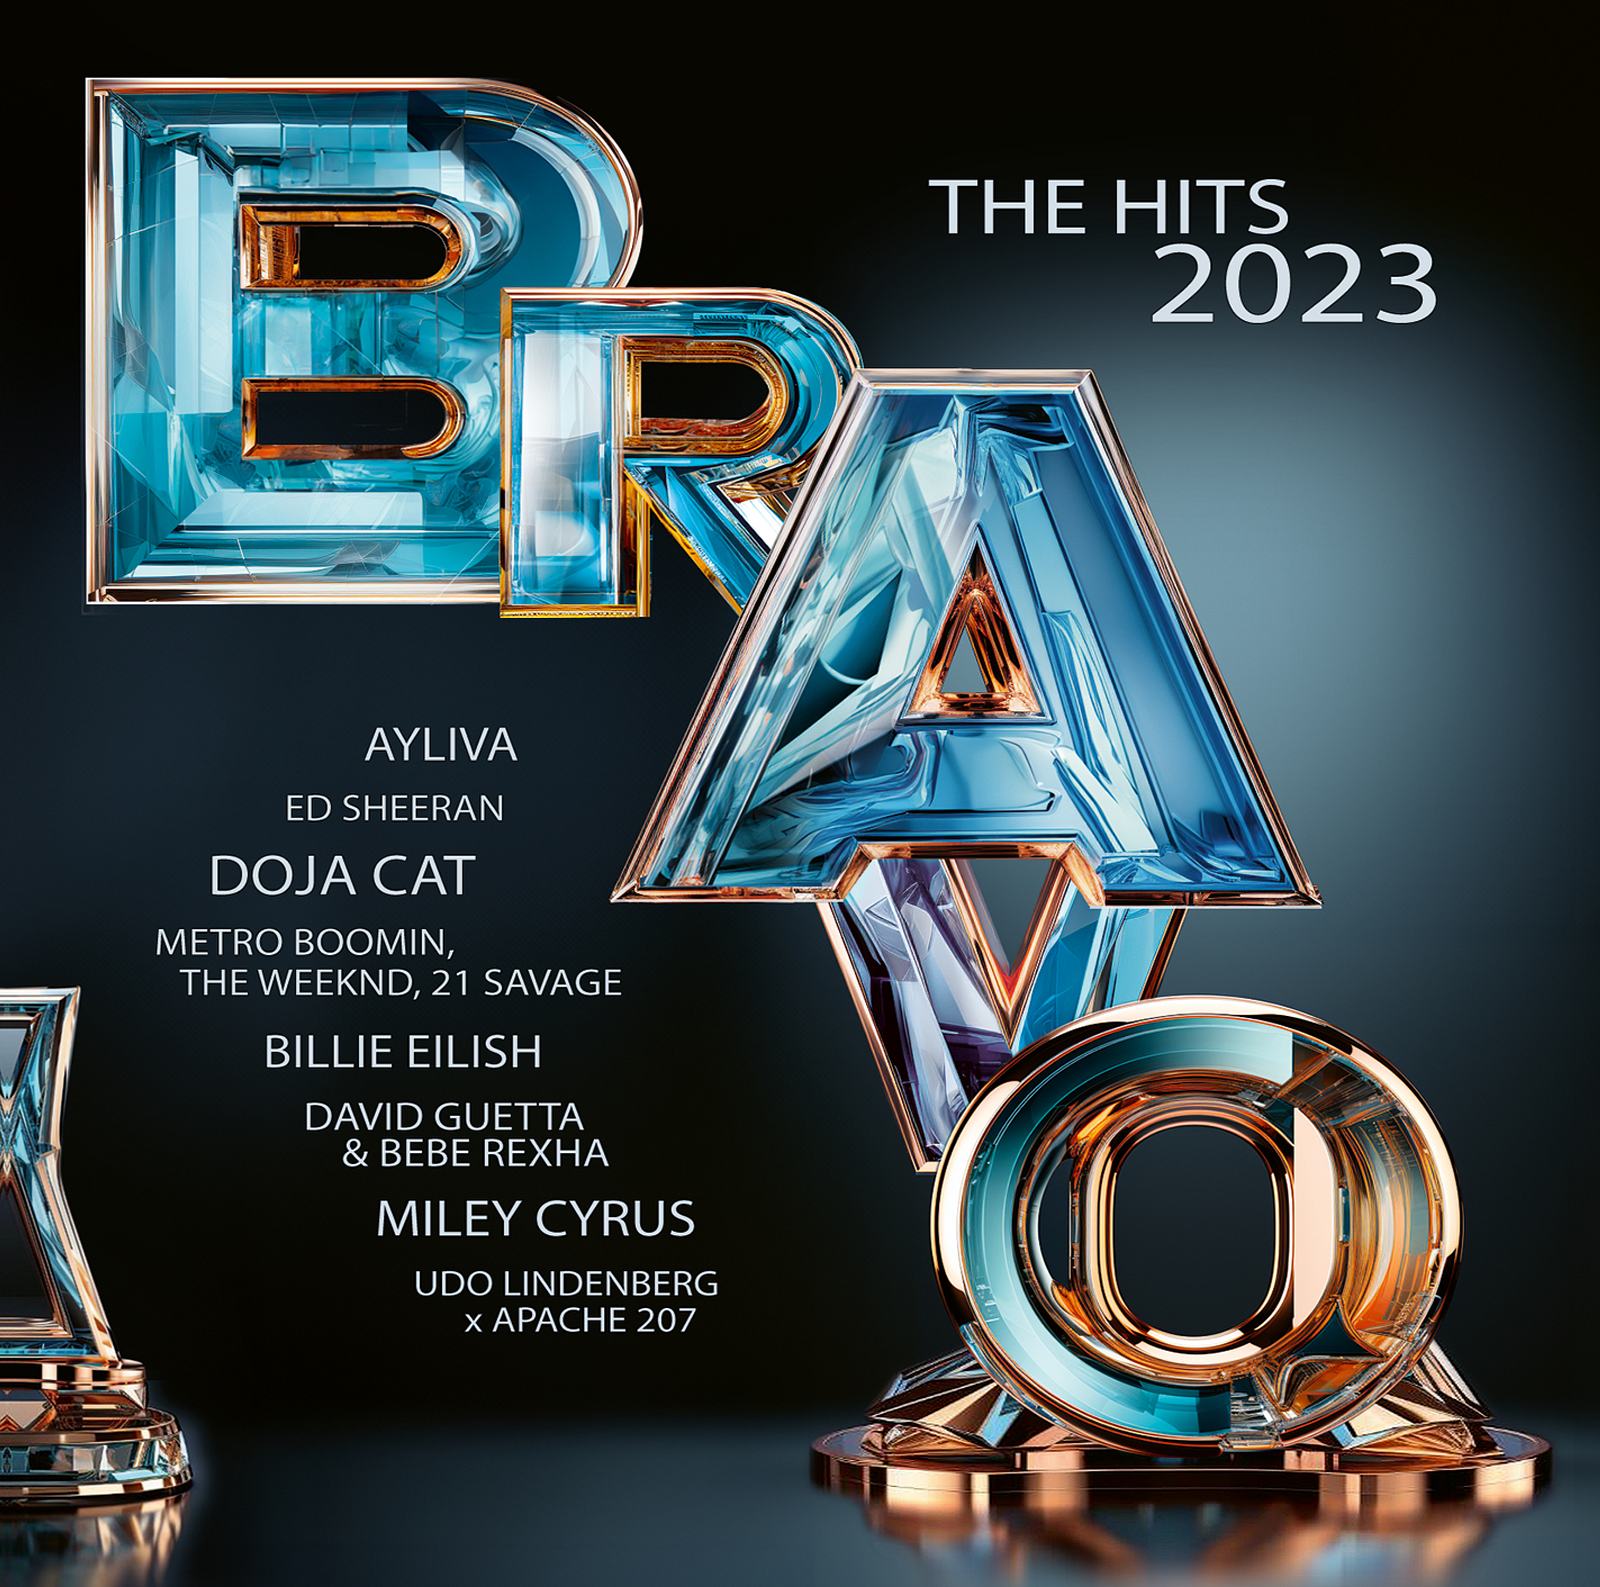 Bravo The Hits 2023 Die Besten Songs Aus 2023,id=05f4bdb5,b=bravo,w=1600,rm=sk 